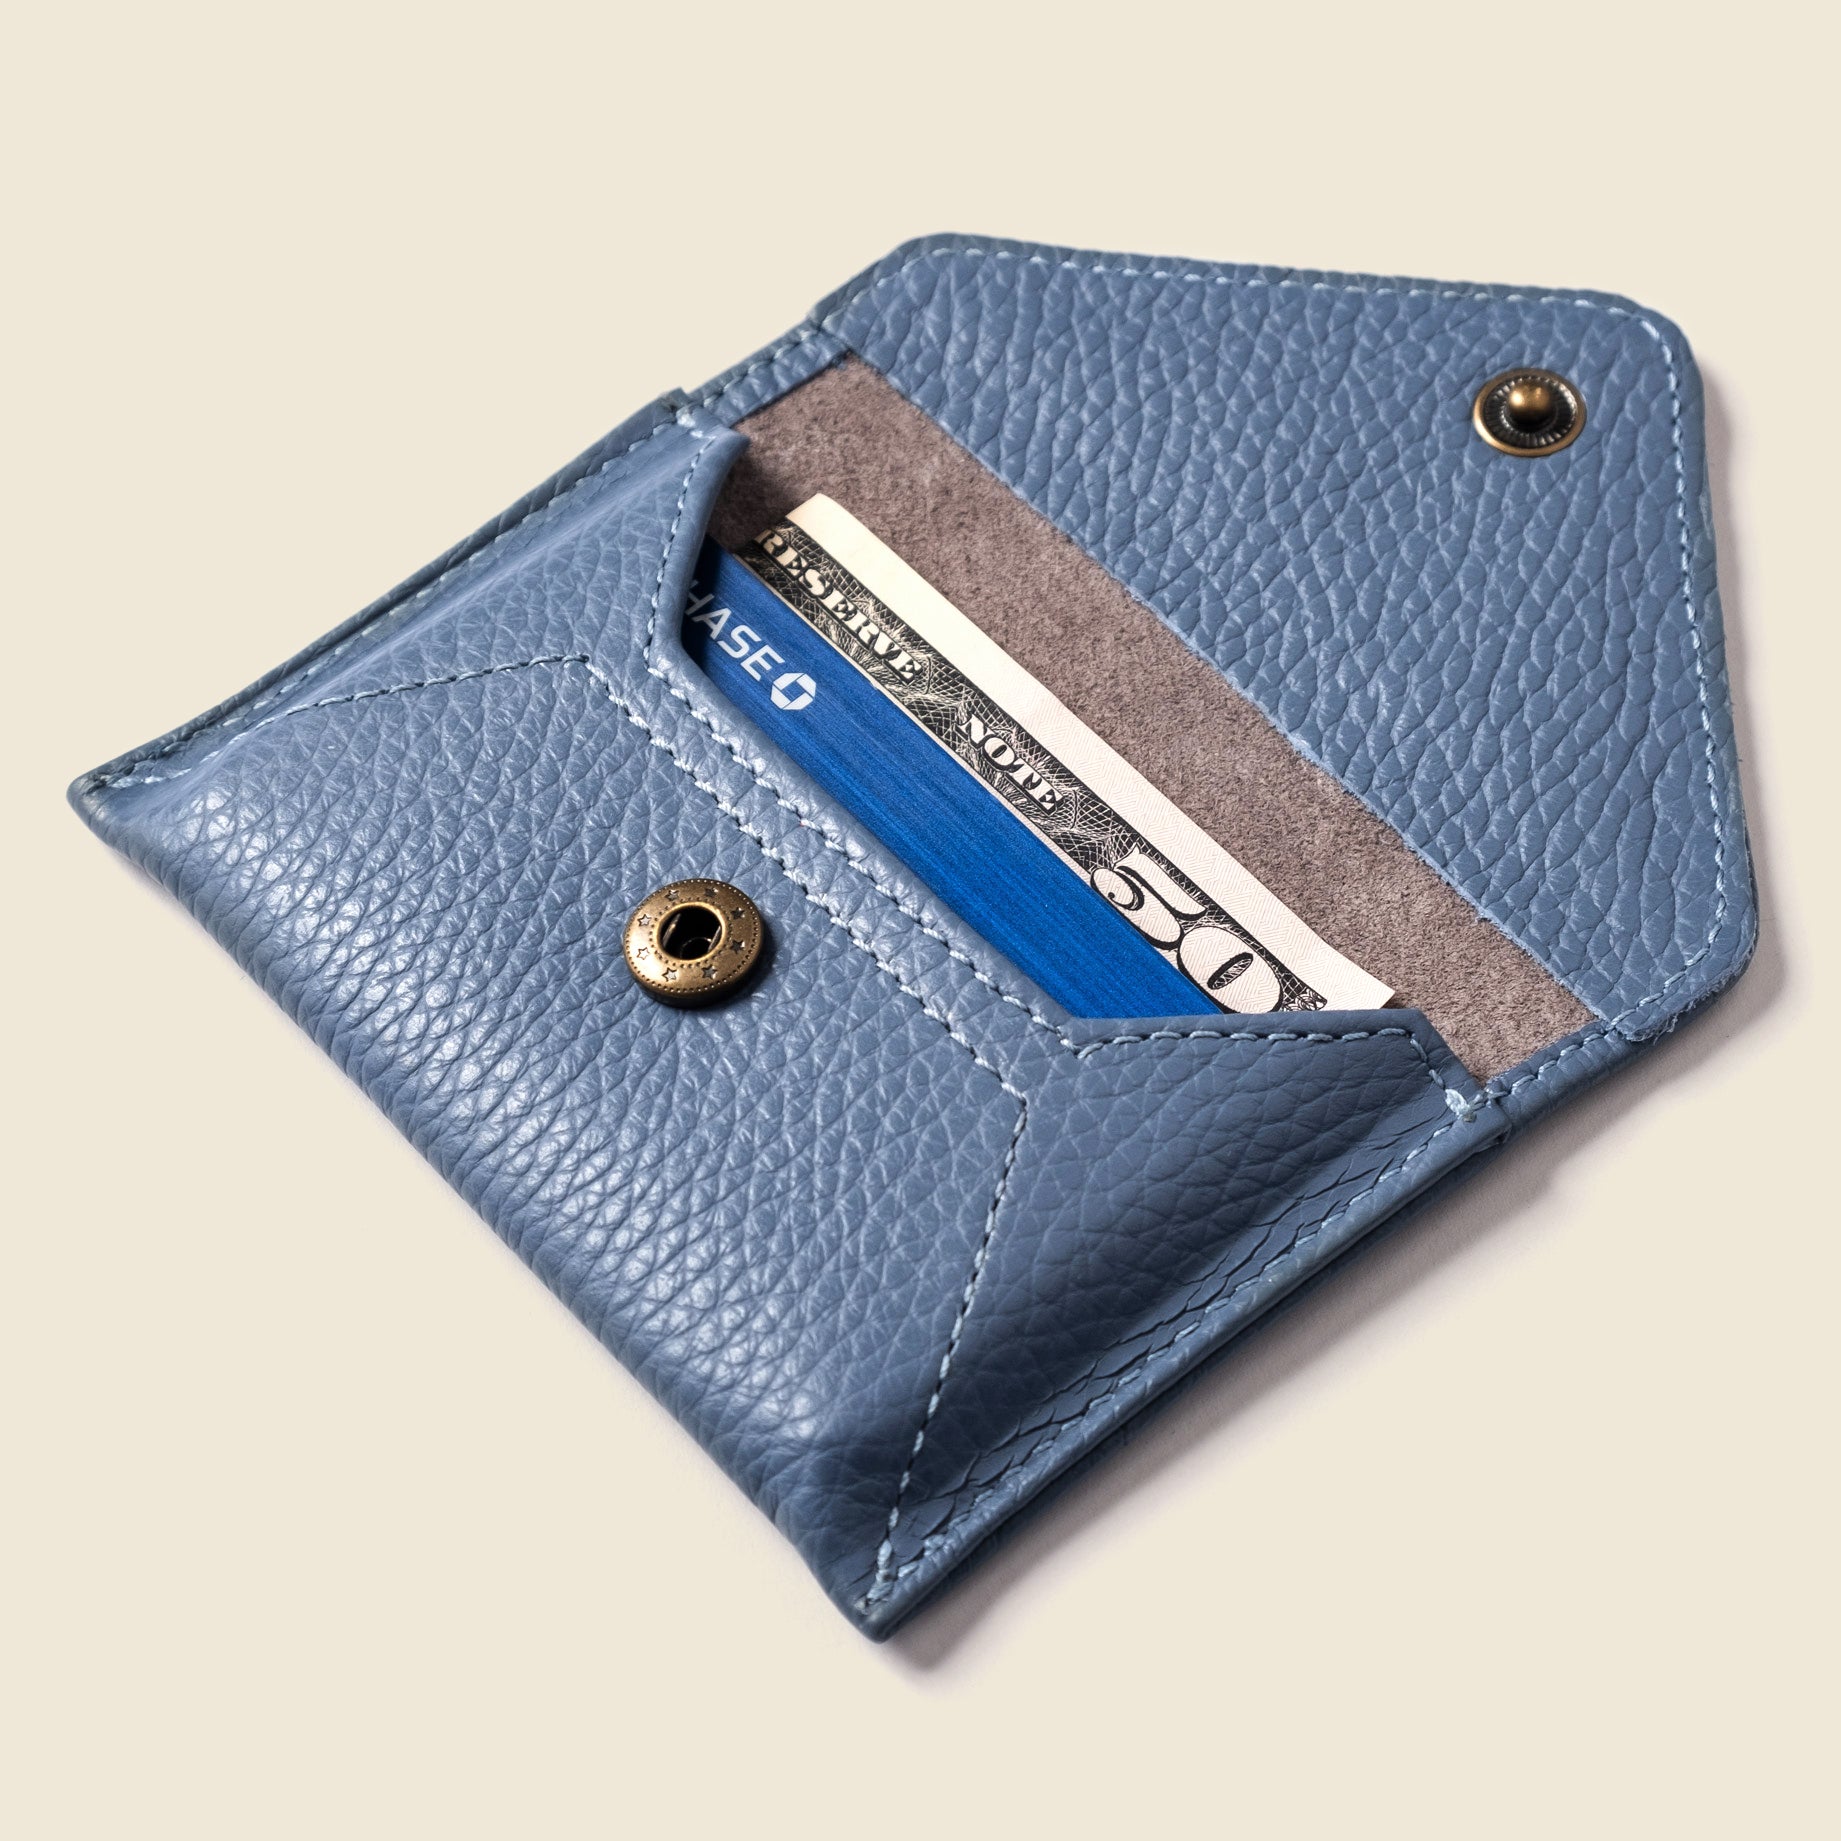 Blue leather envelope wallet for women